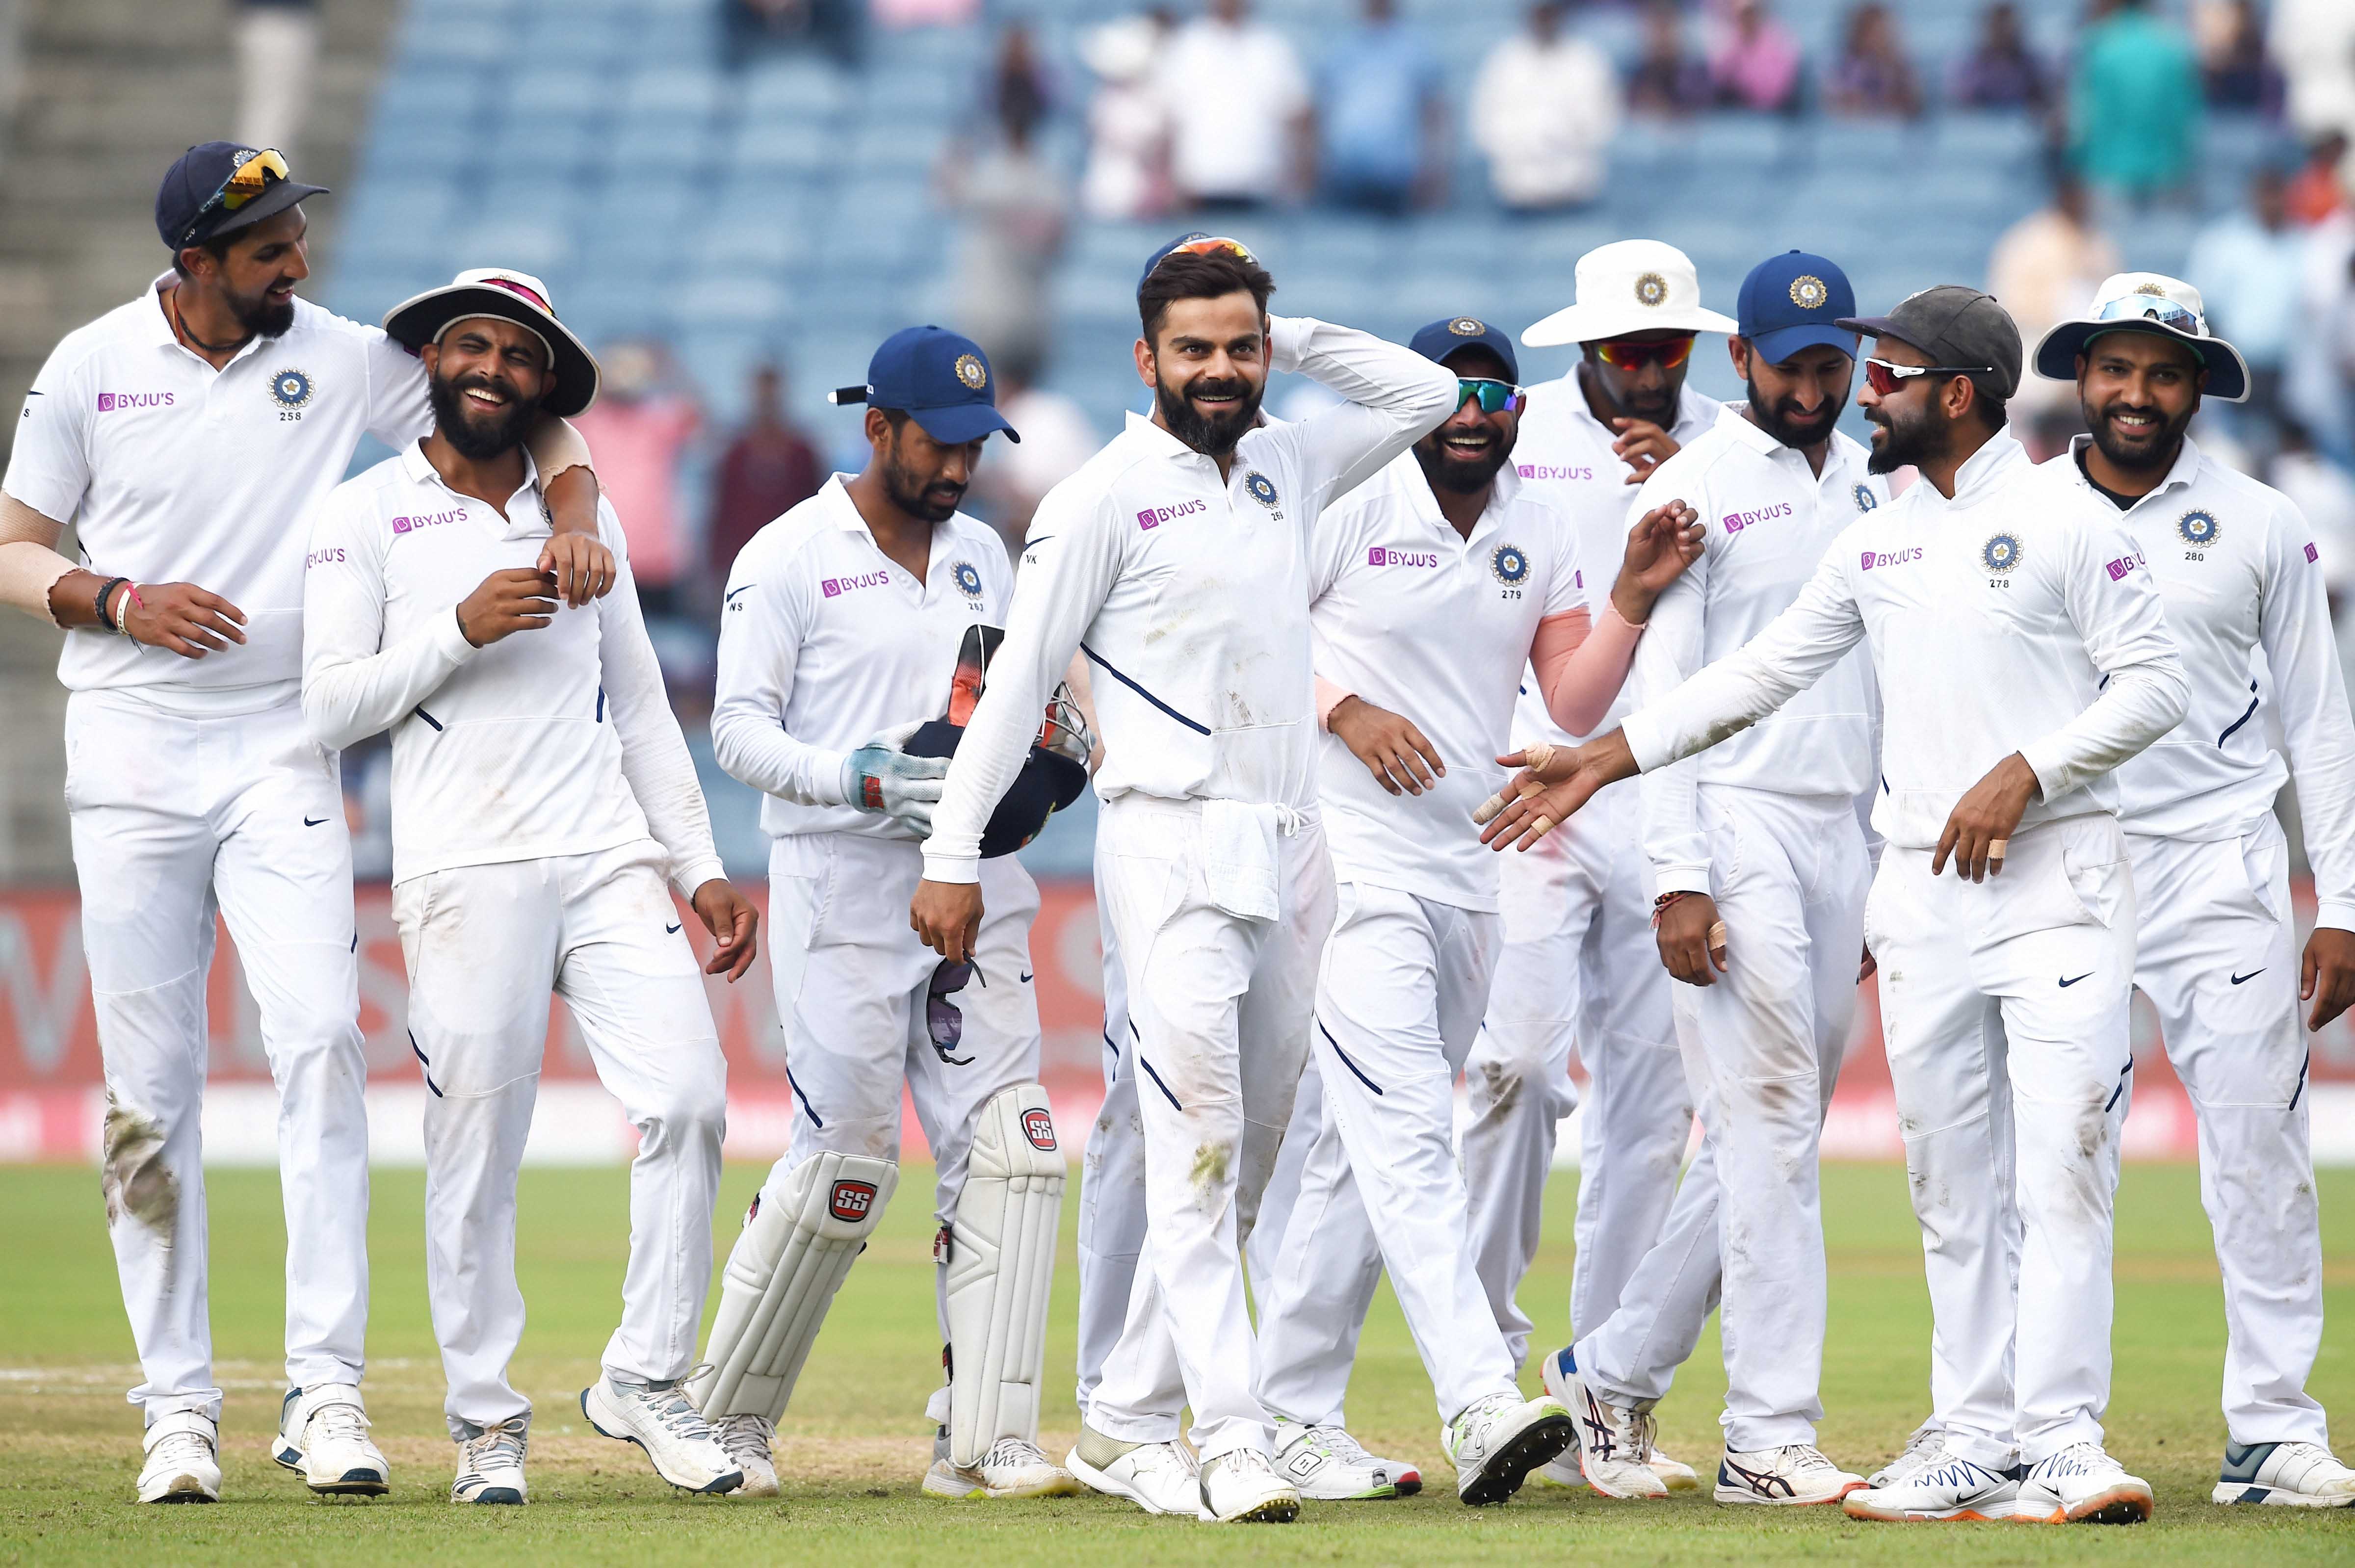 Virat Kohli, World Test Championship, Faf du Plessis, series win, third Test, second Test, Ajinkya Rahane, Wrddhiman Saha, Lungi Ngidi, South Africa tour of India